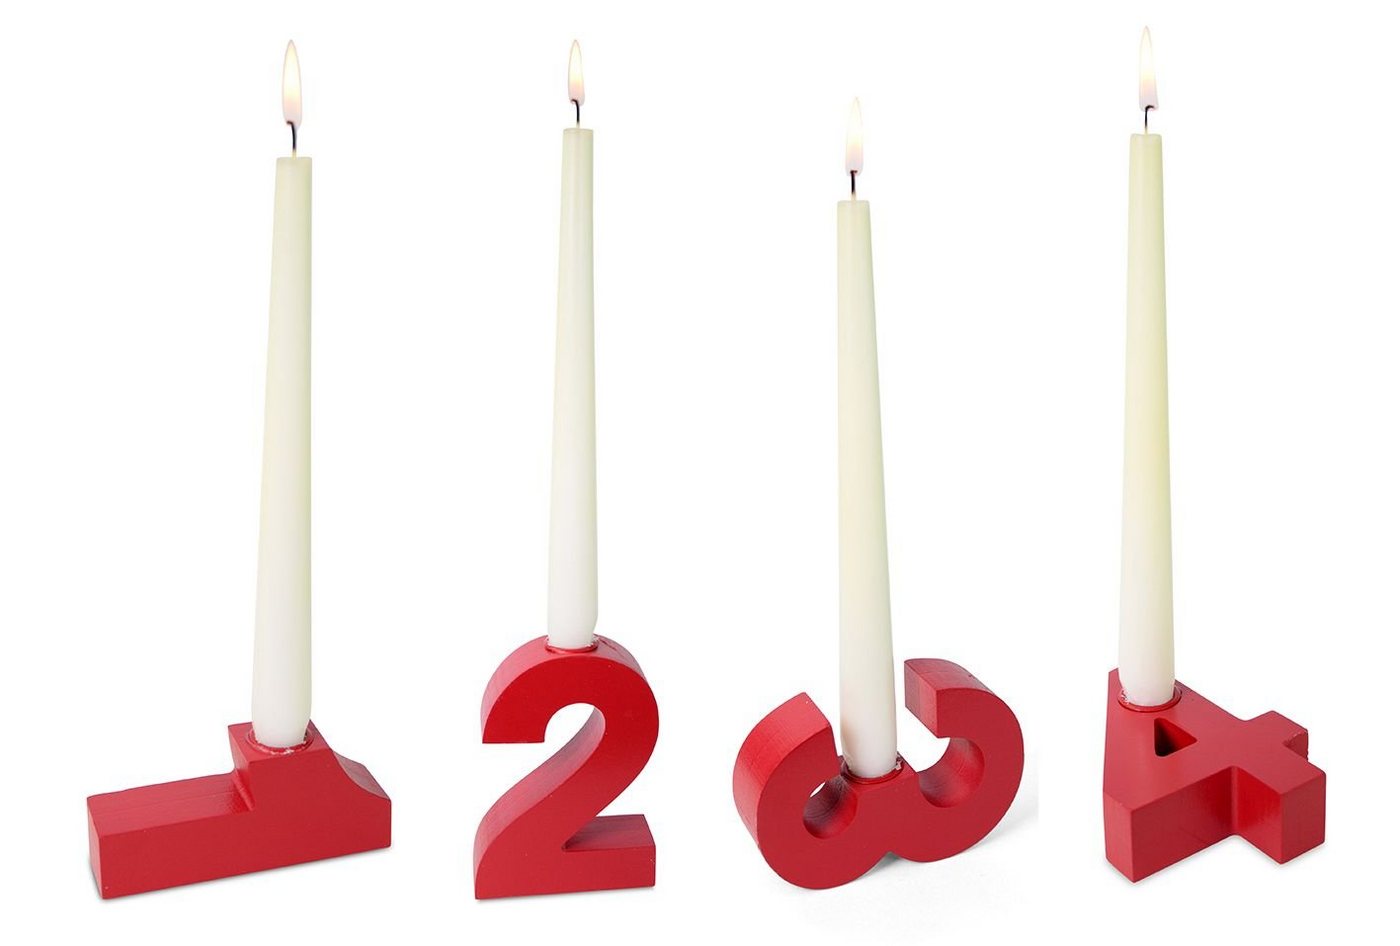 Wiedemann Handgelenkstütze Adventskerzenhalter 1-2-3-4 - Holz, inkl. Kerzen, rot, 4er Set von Wiedemann